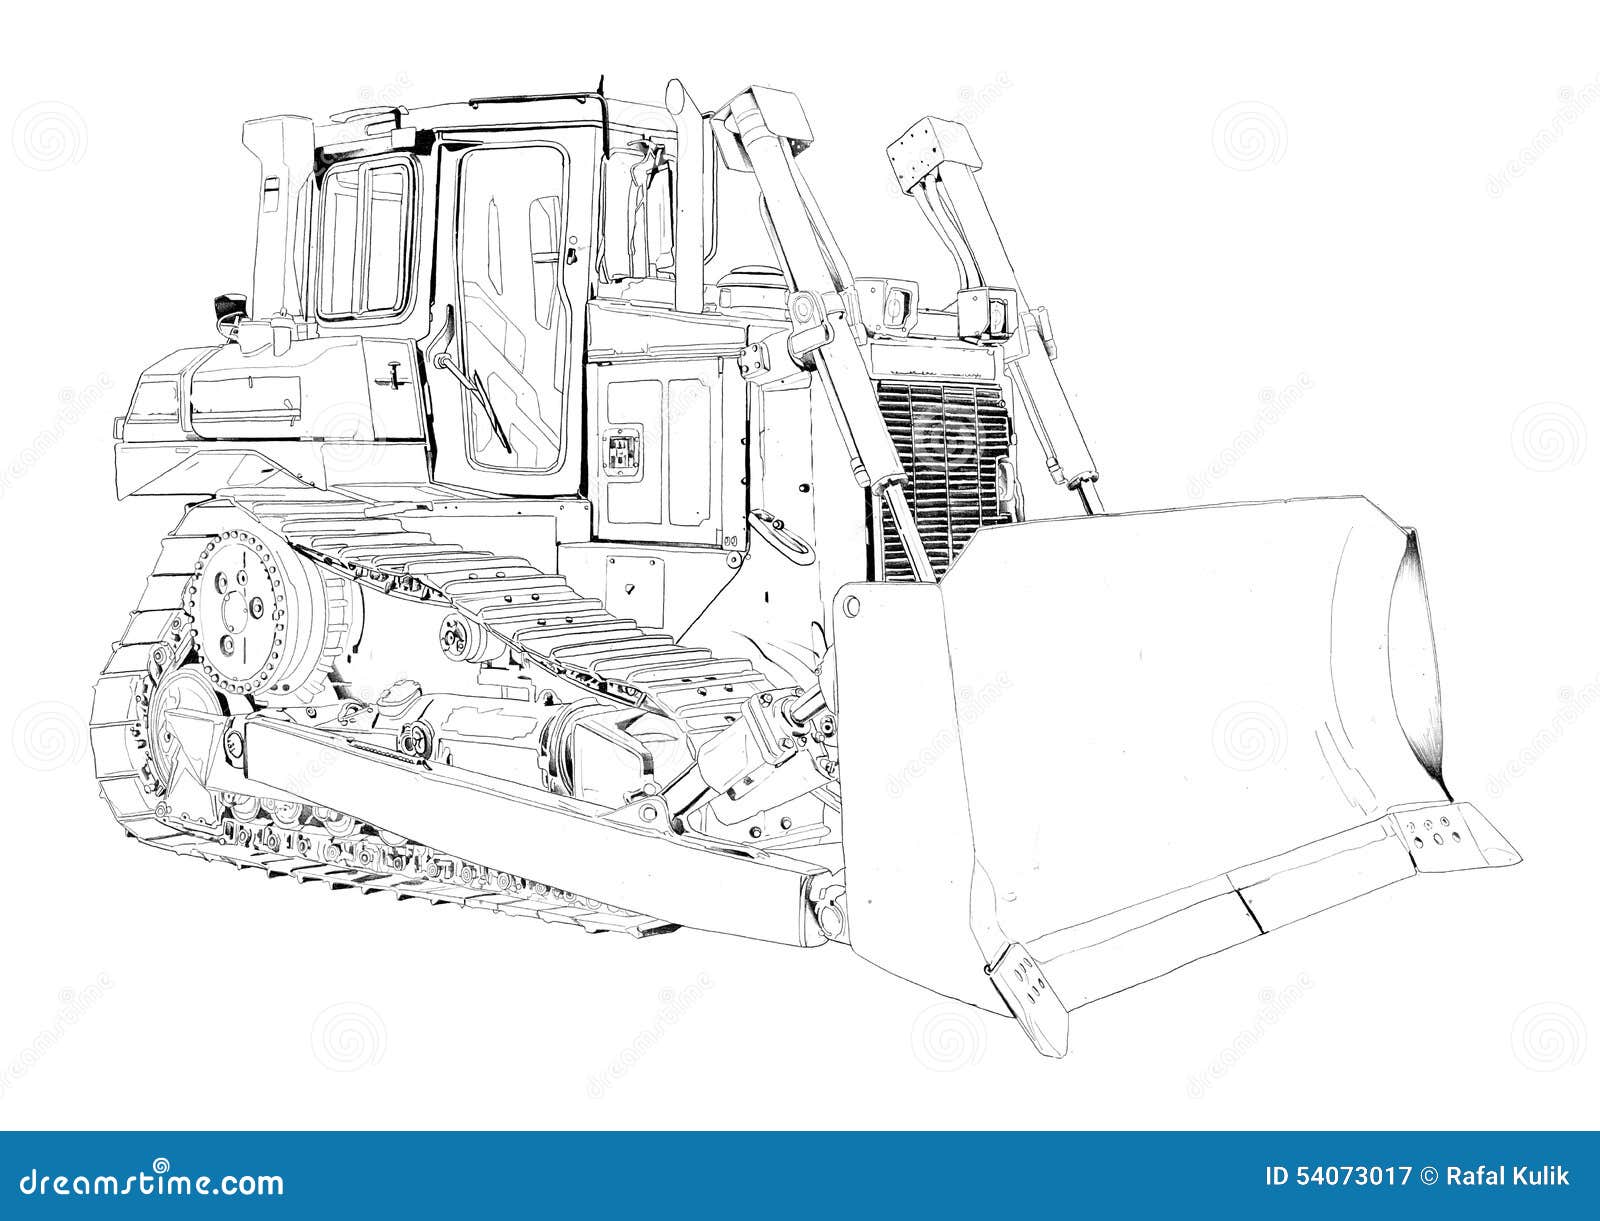 Bulldozer | MTG - Ground Engaging Tools